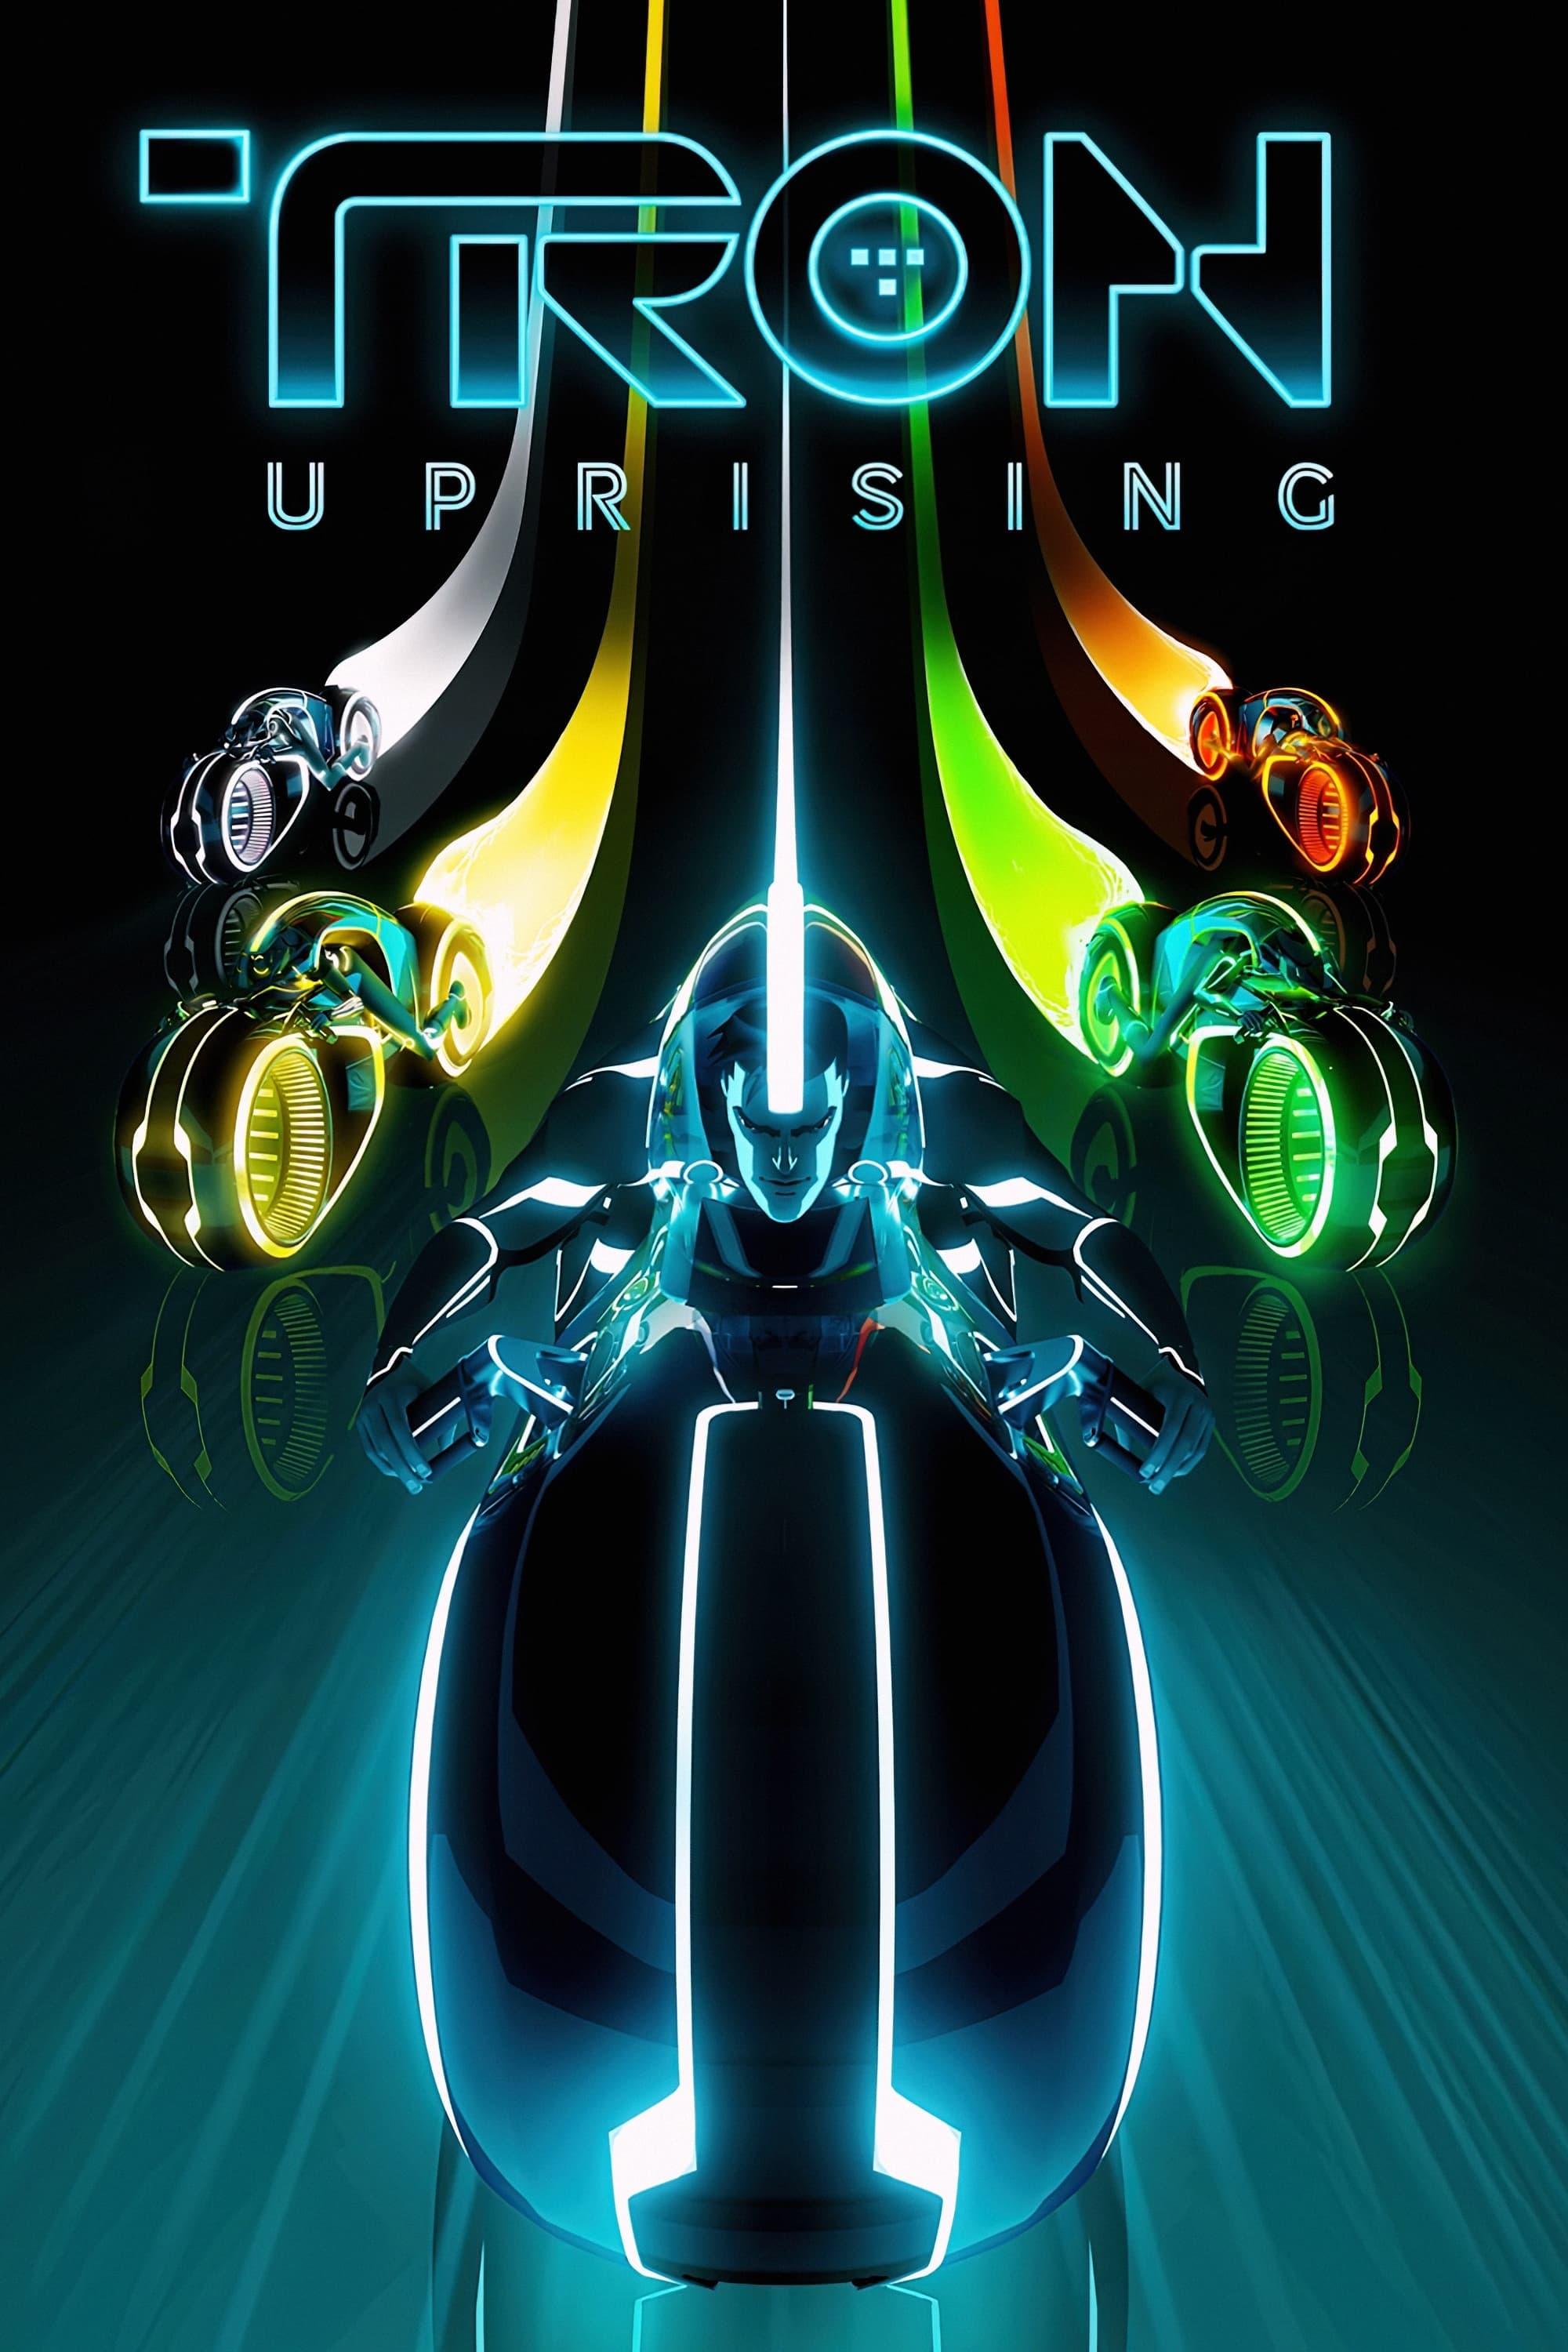 TRON: Uprising poster